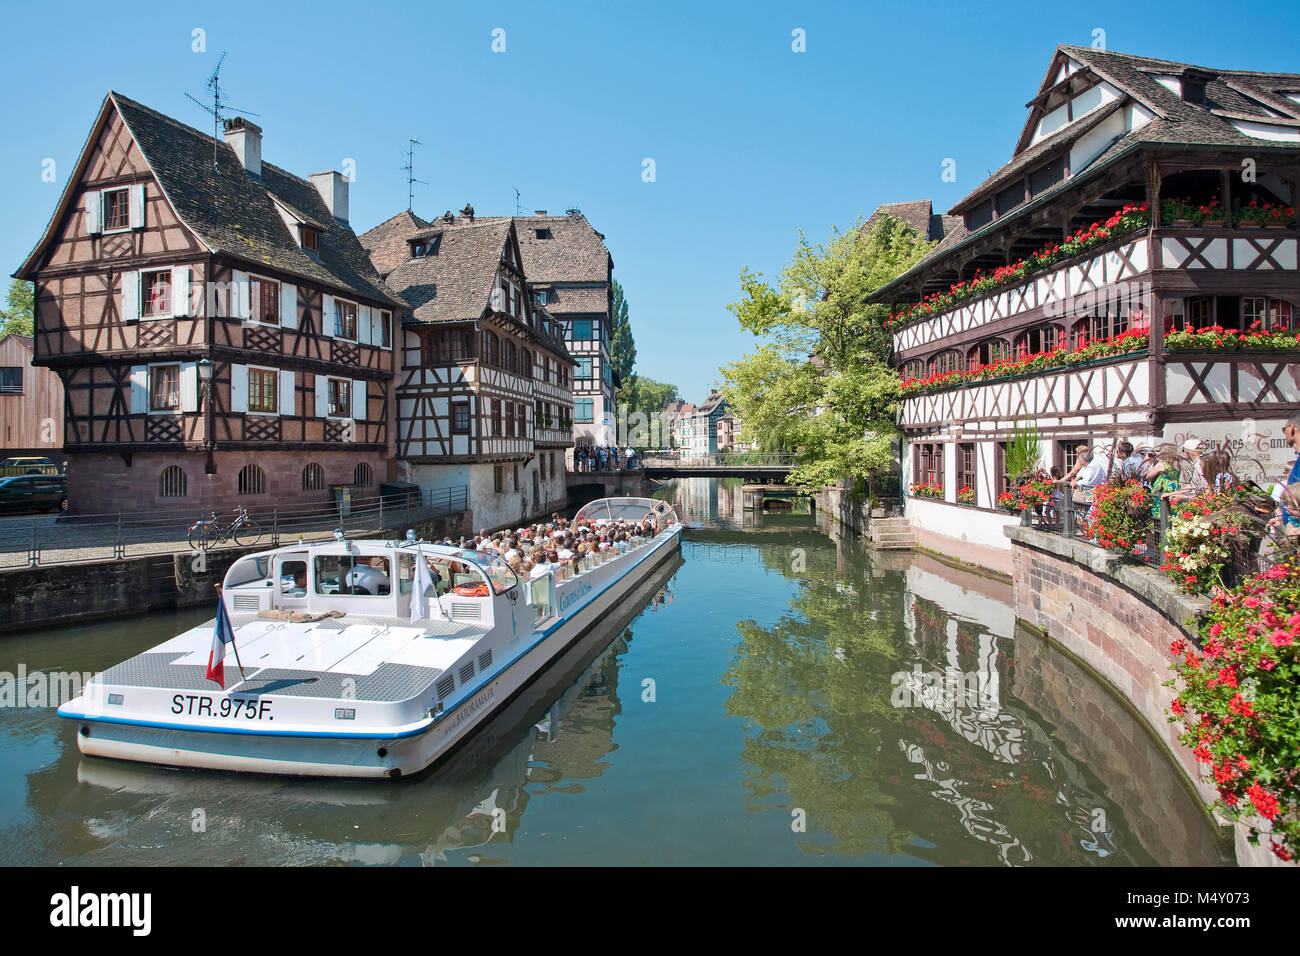 Boat trip on Ill river, La Petite France (Little France), right side the restaurant Maison des Tanneurs, Strasbourg, Alsace, France, Europe Stock Photo